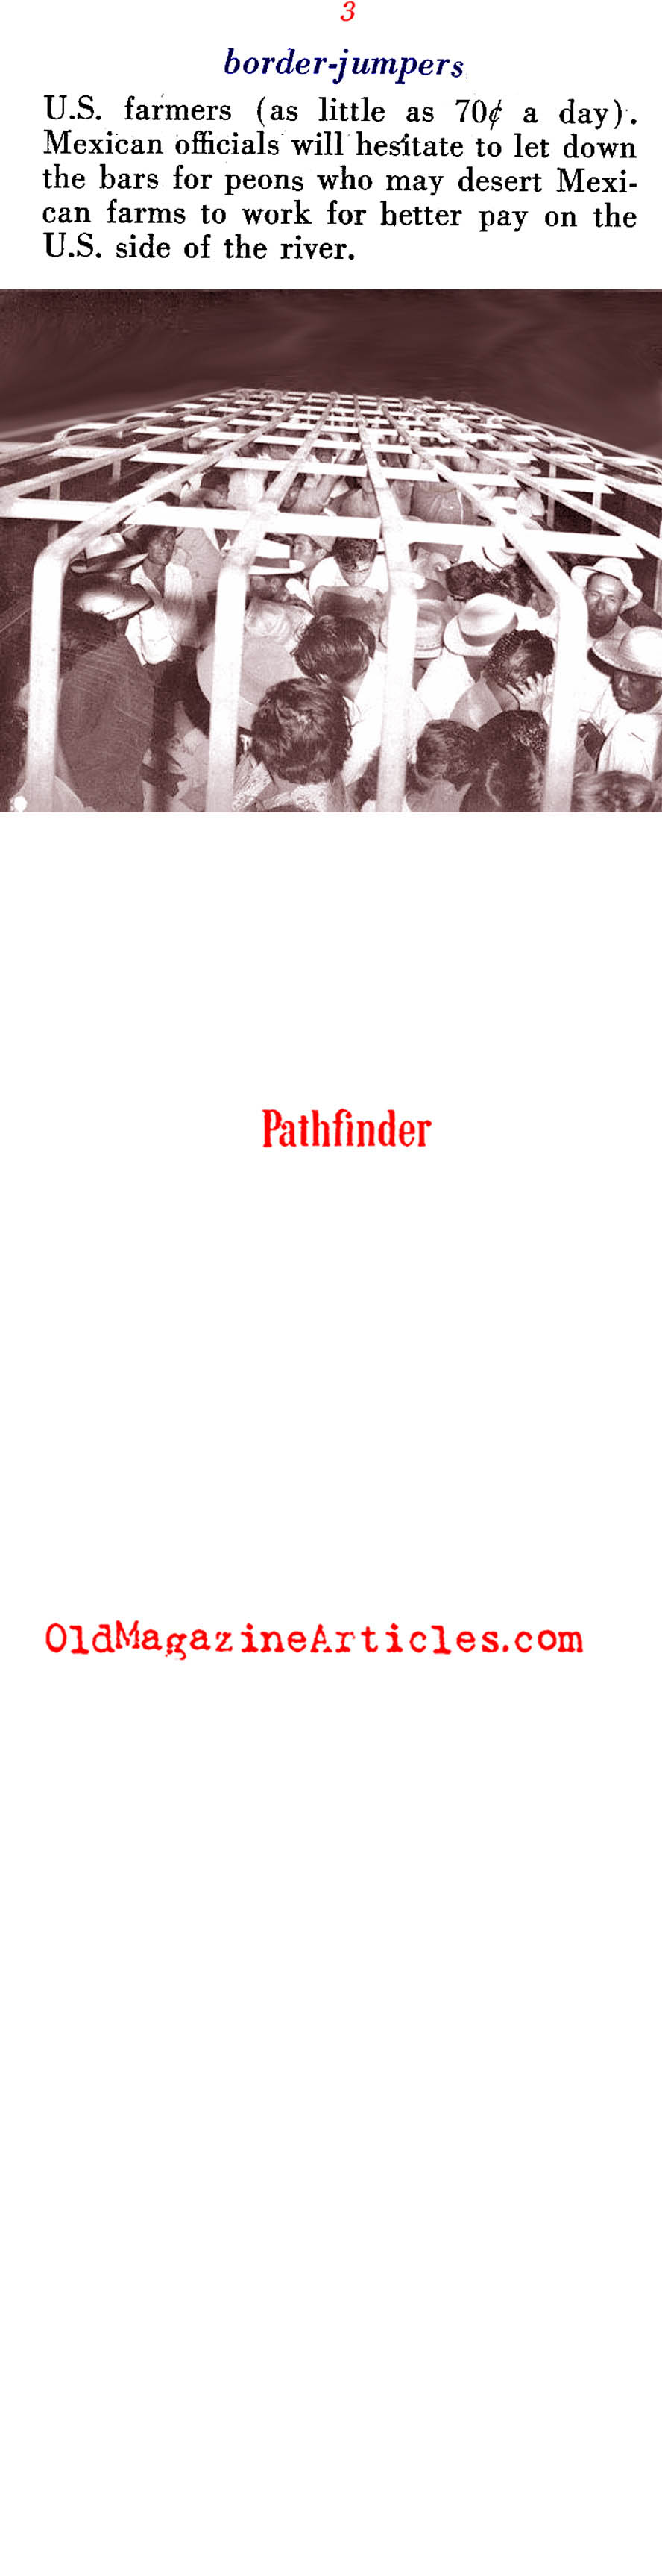 The Border-Jumper Problem<BR> (Pathfinder Magazine, 1952)